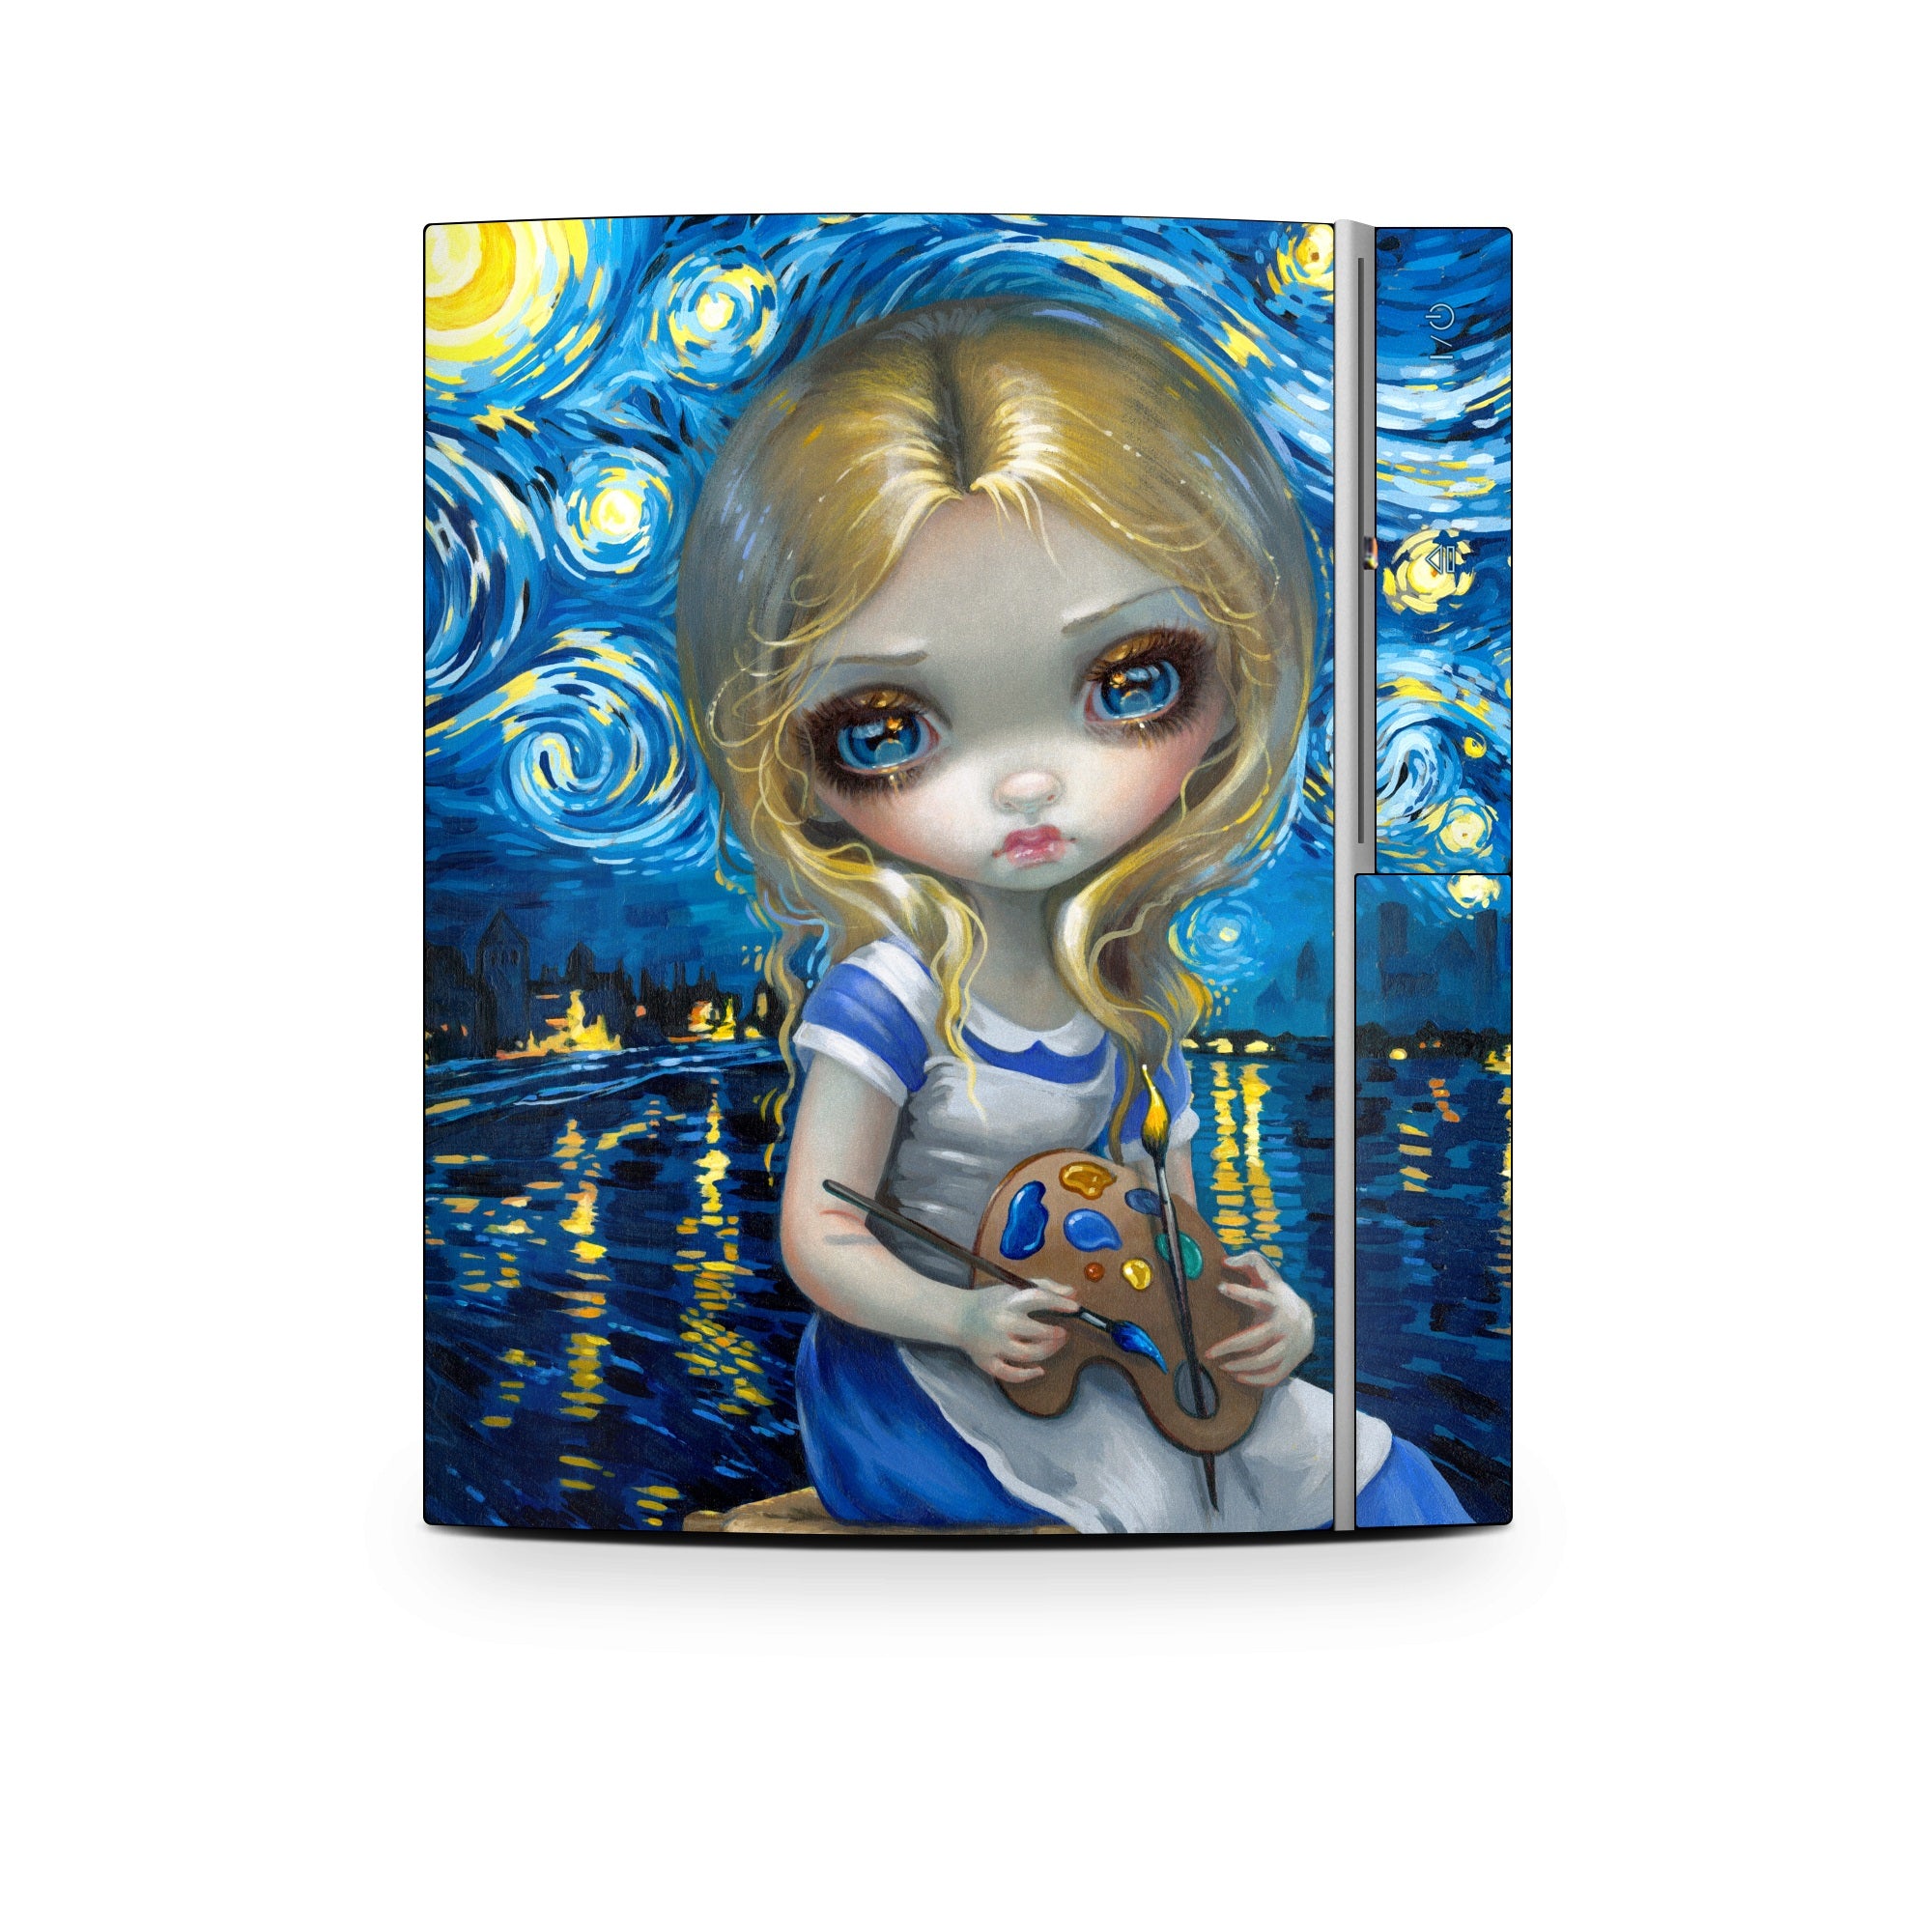 Alice in a Van Gogh - Sony PS3 Skin